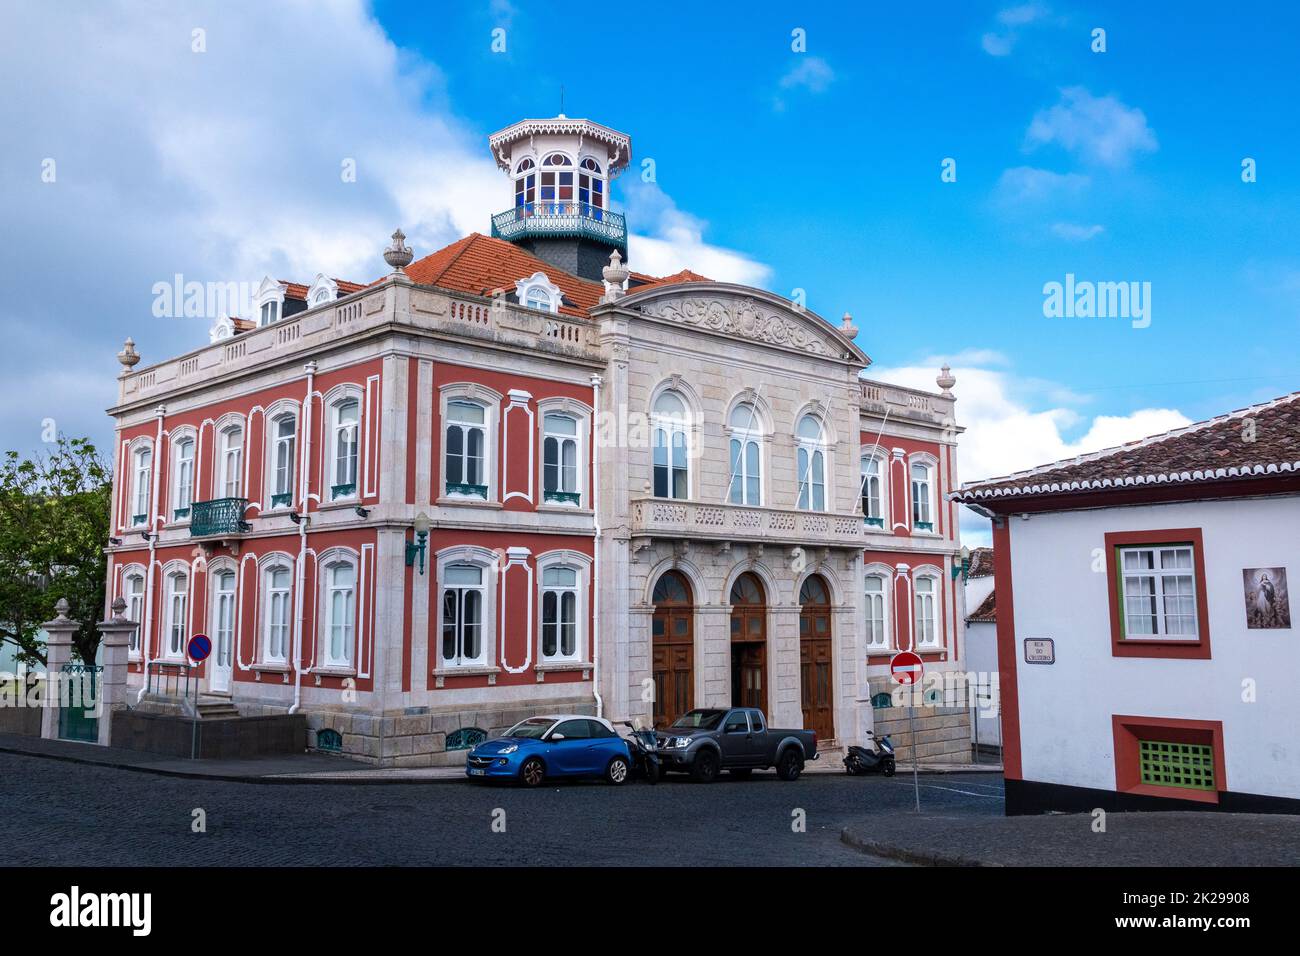 La residenza Silveira e Paulo, o Palacete Silveira e Paulo sulla Rua da Conceicao in Angra do Heroismo, Terceira Island, Azzorre, Portogallo. Foto Stock